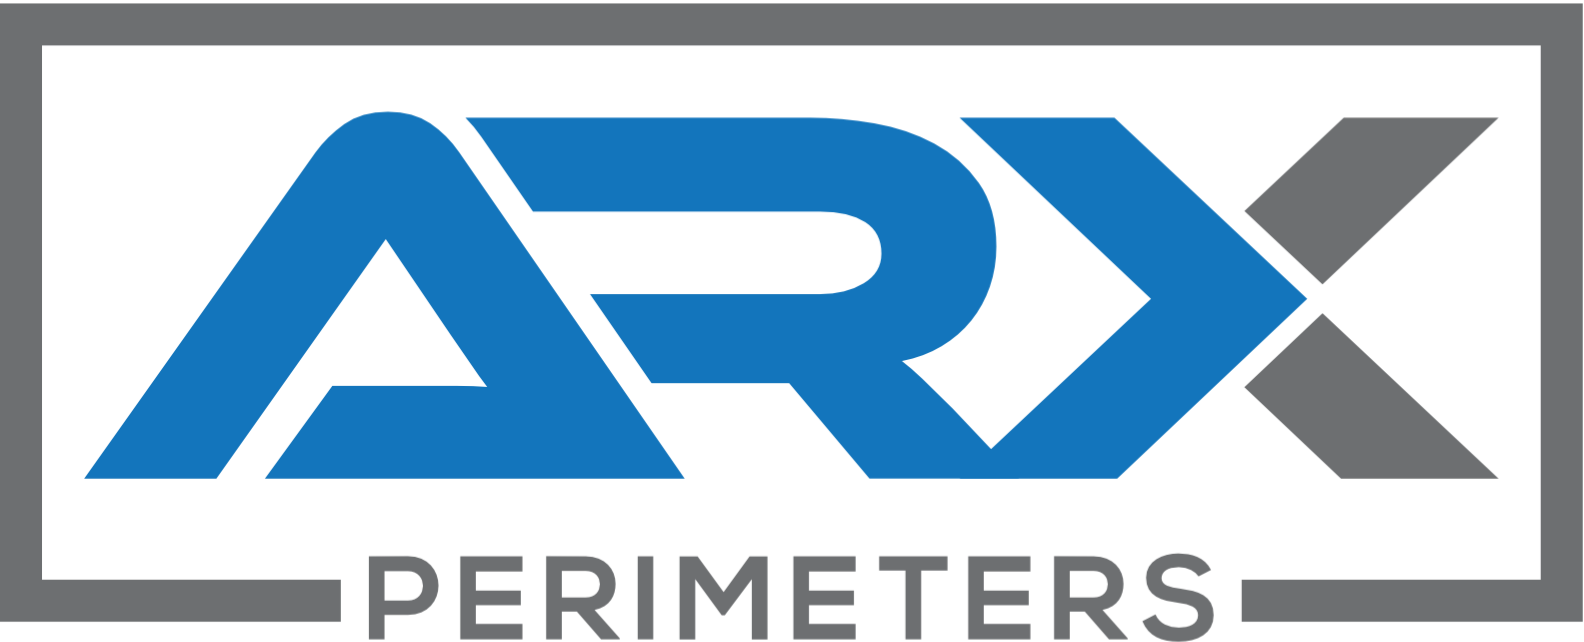 arx perimeters logo